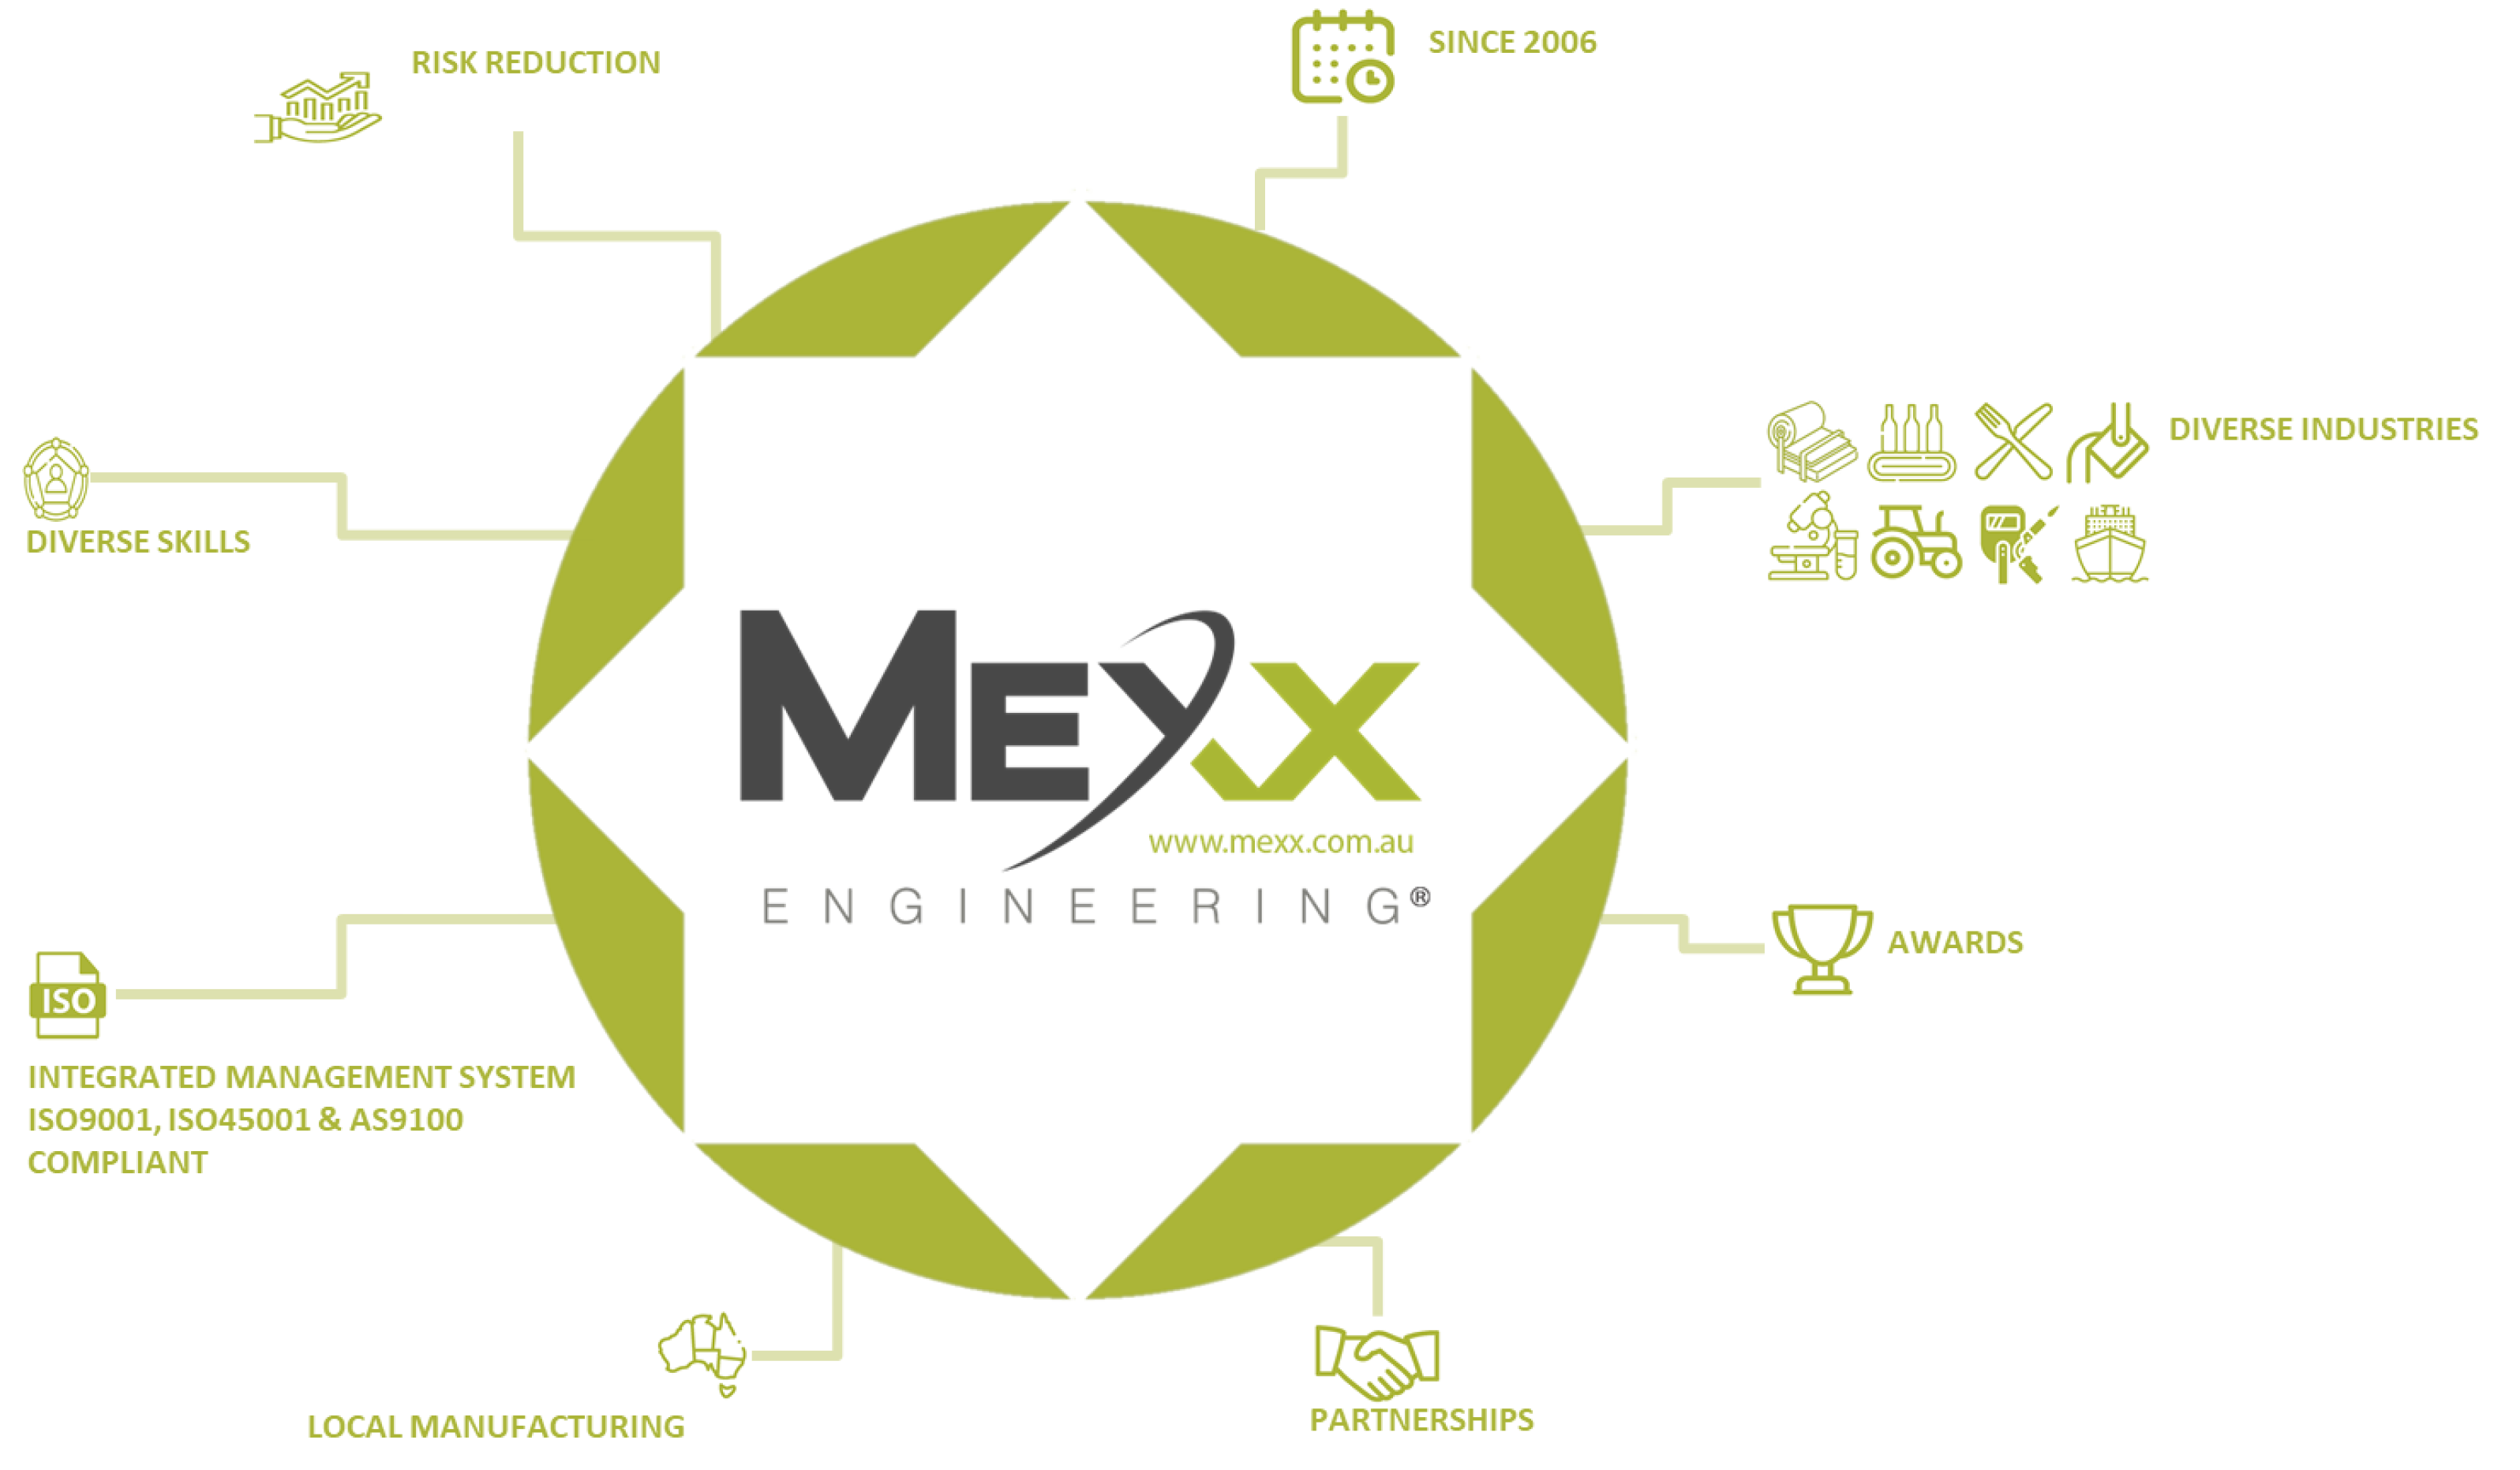 Mexx Engineering®